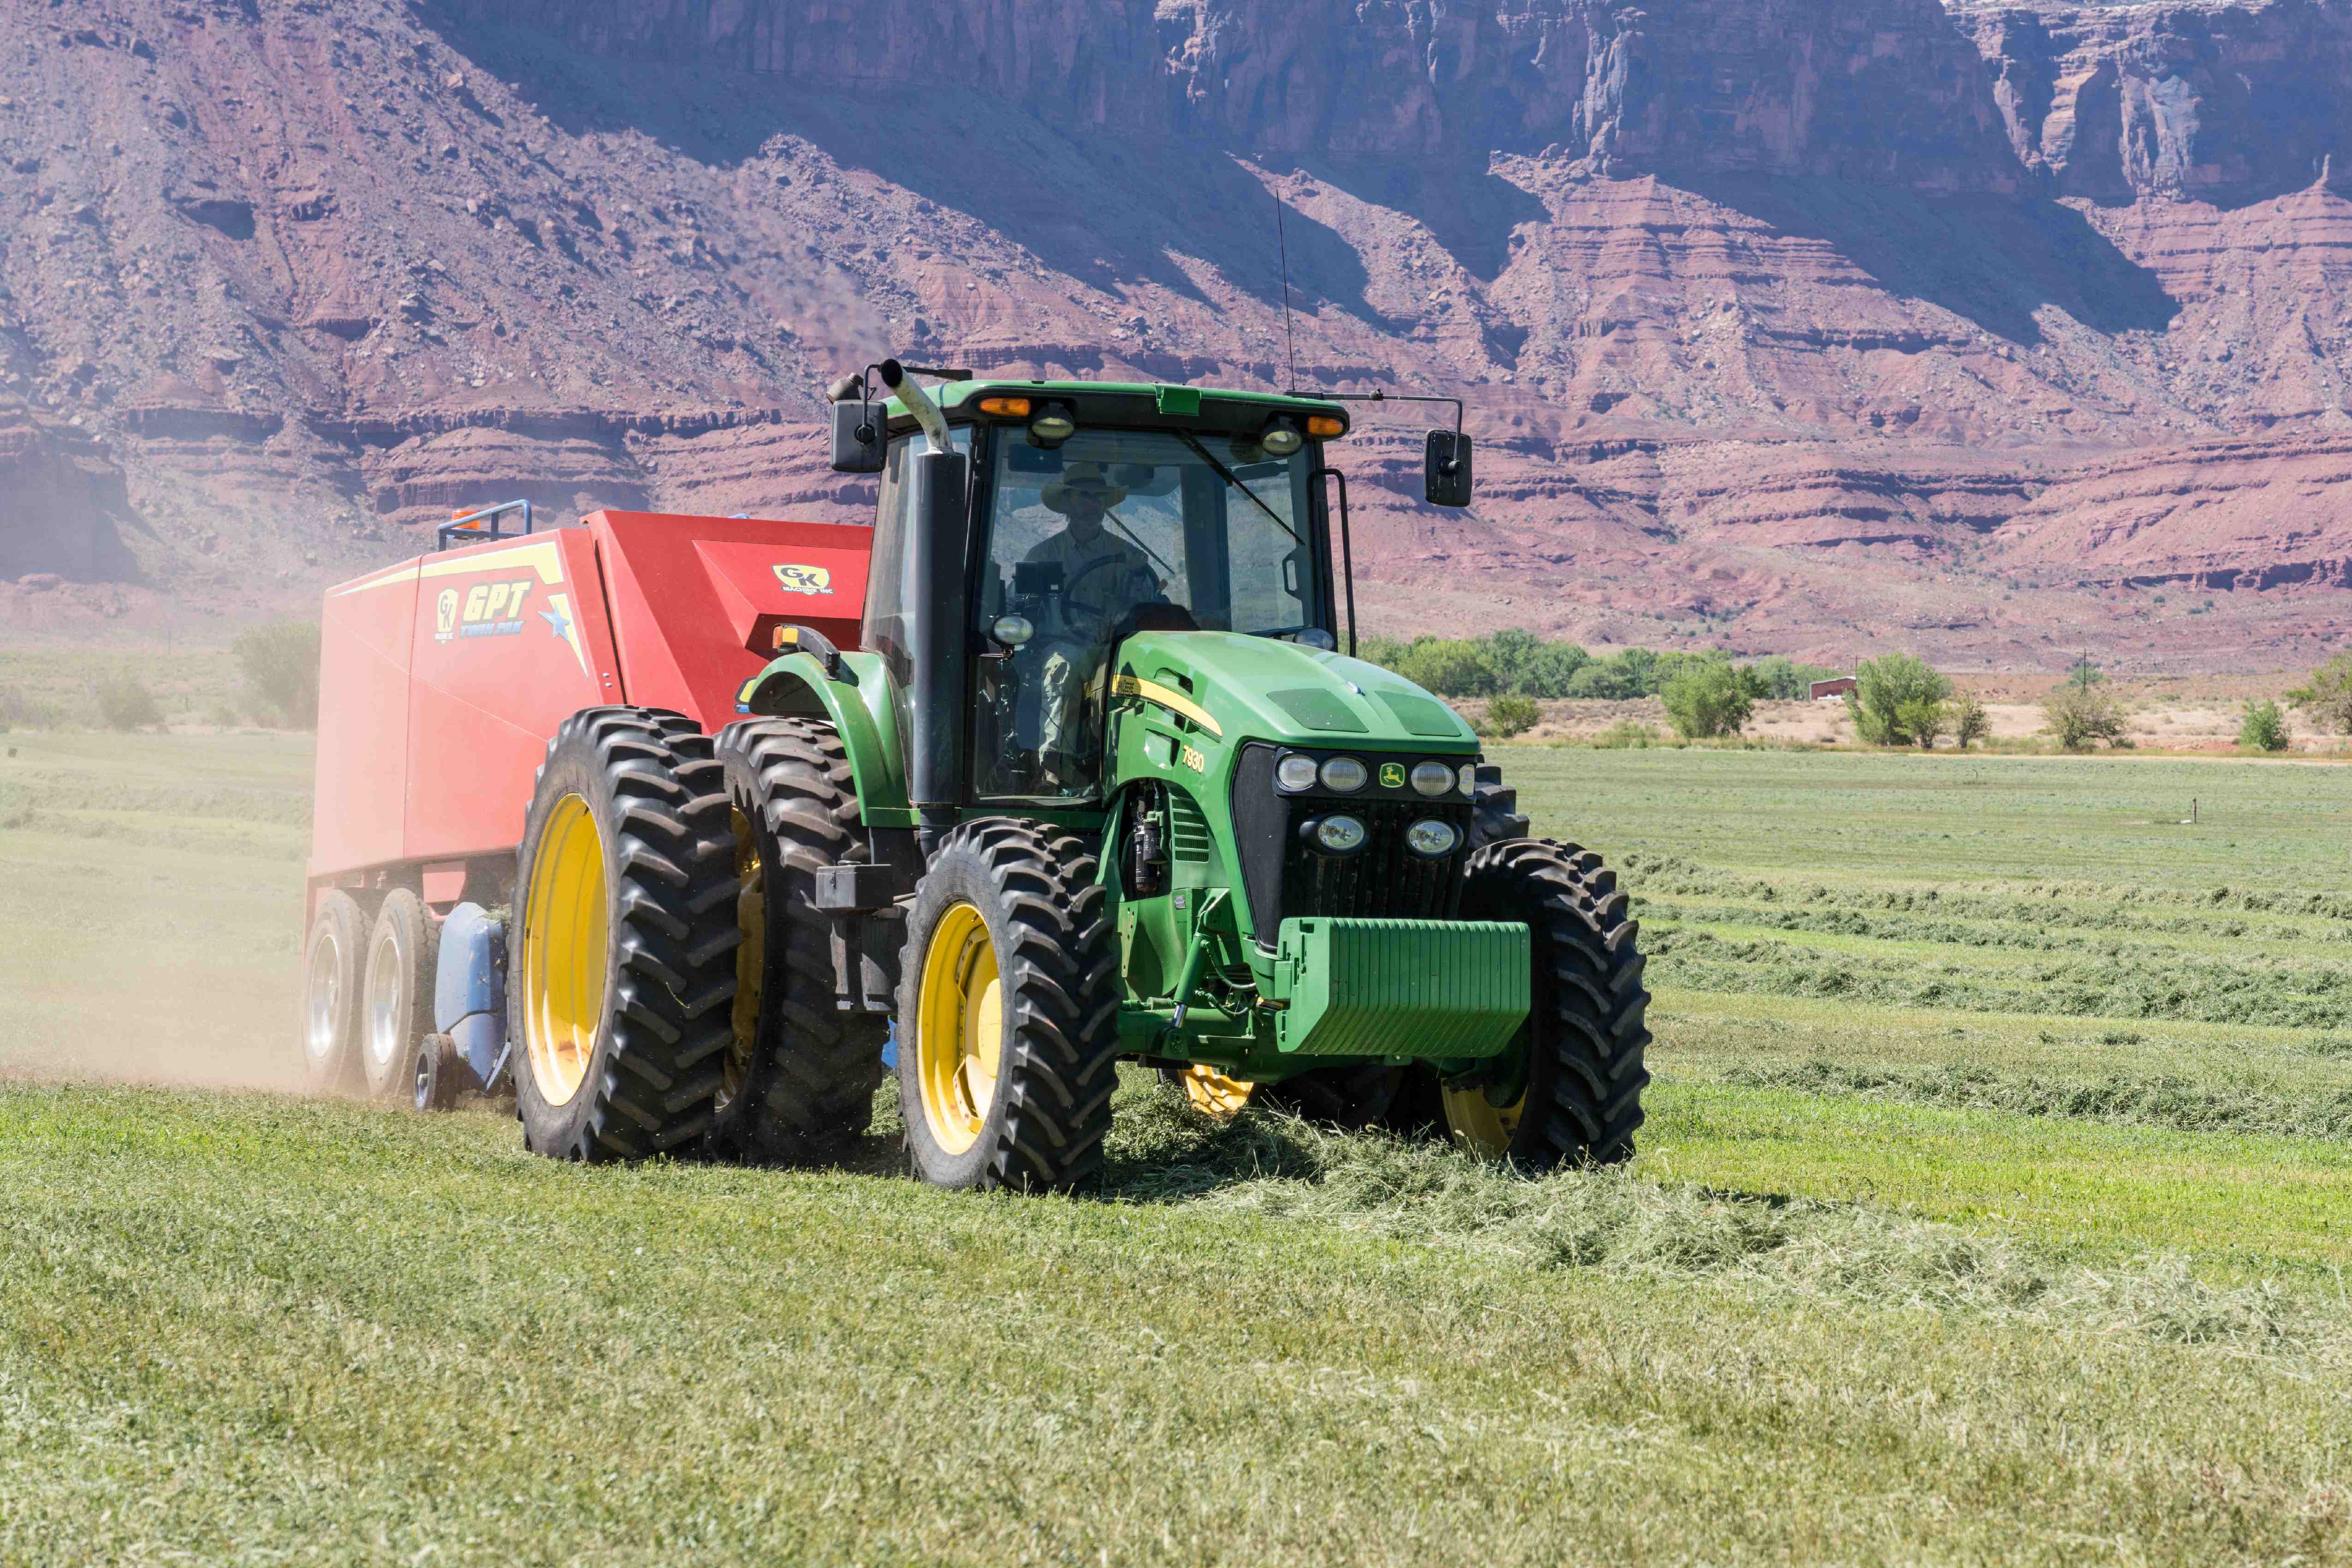 John Deere will let US farmers repair their own equipment